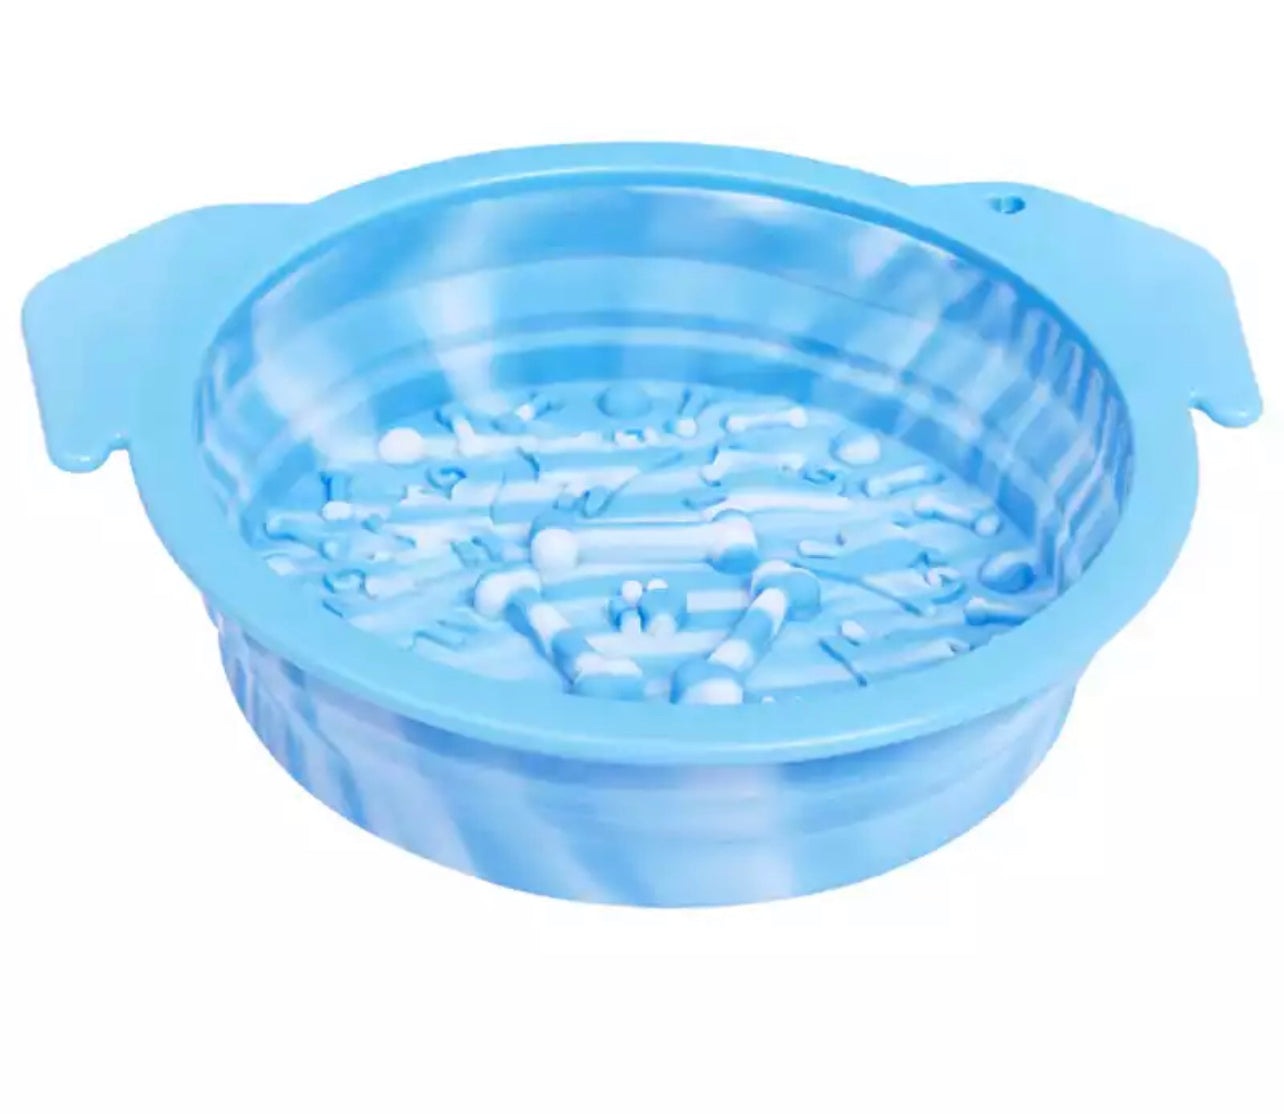 Multifunctional Portable Dog Bowl - Blue